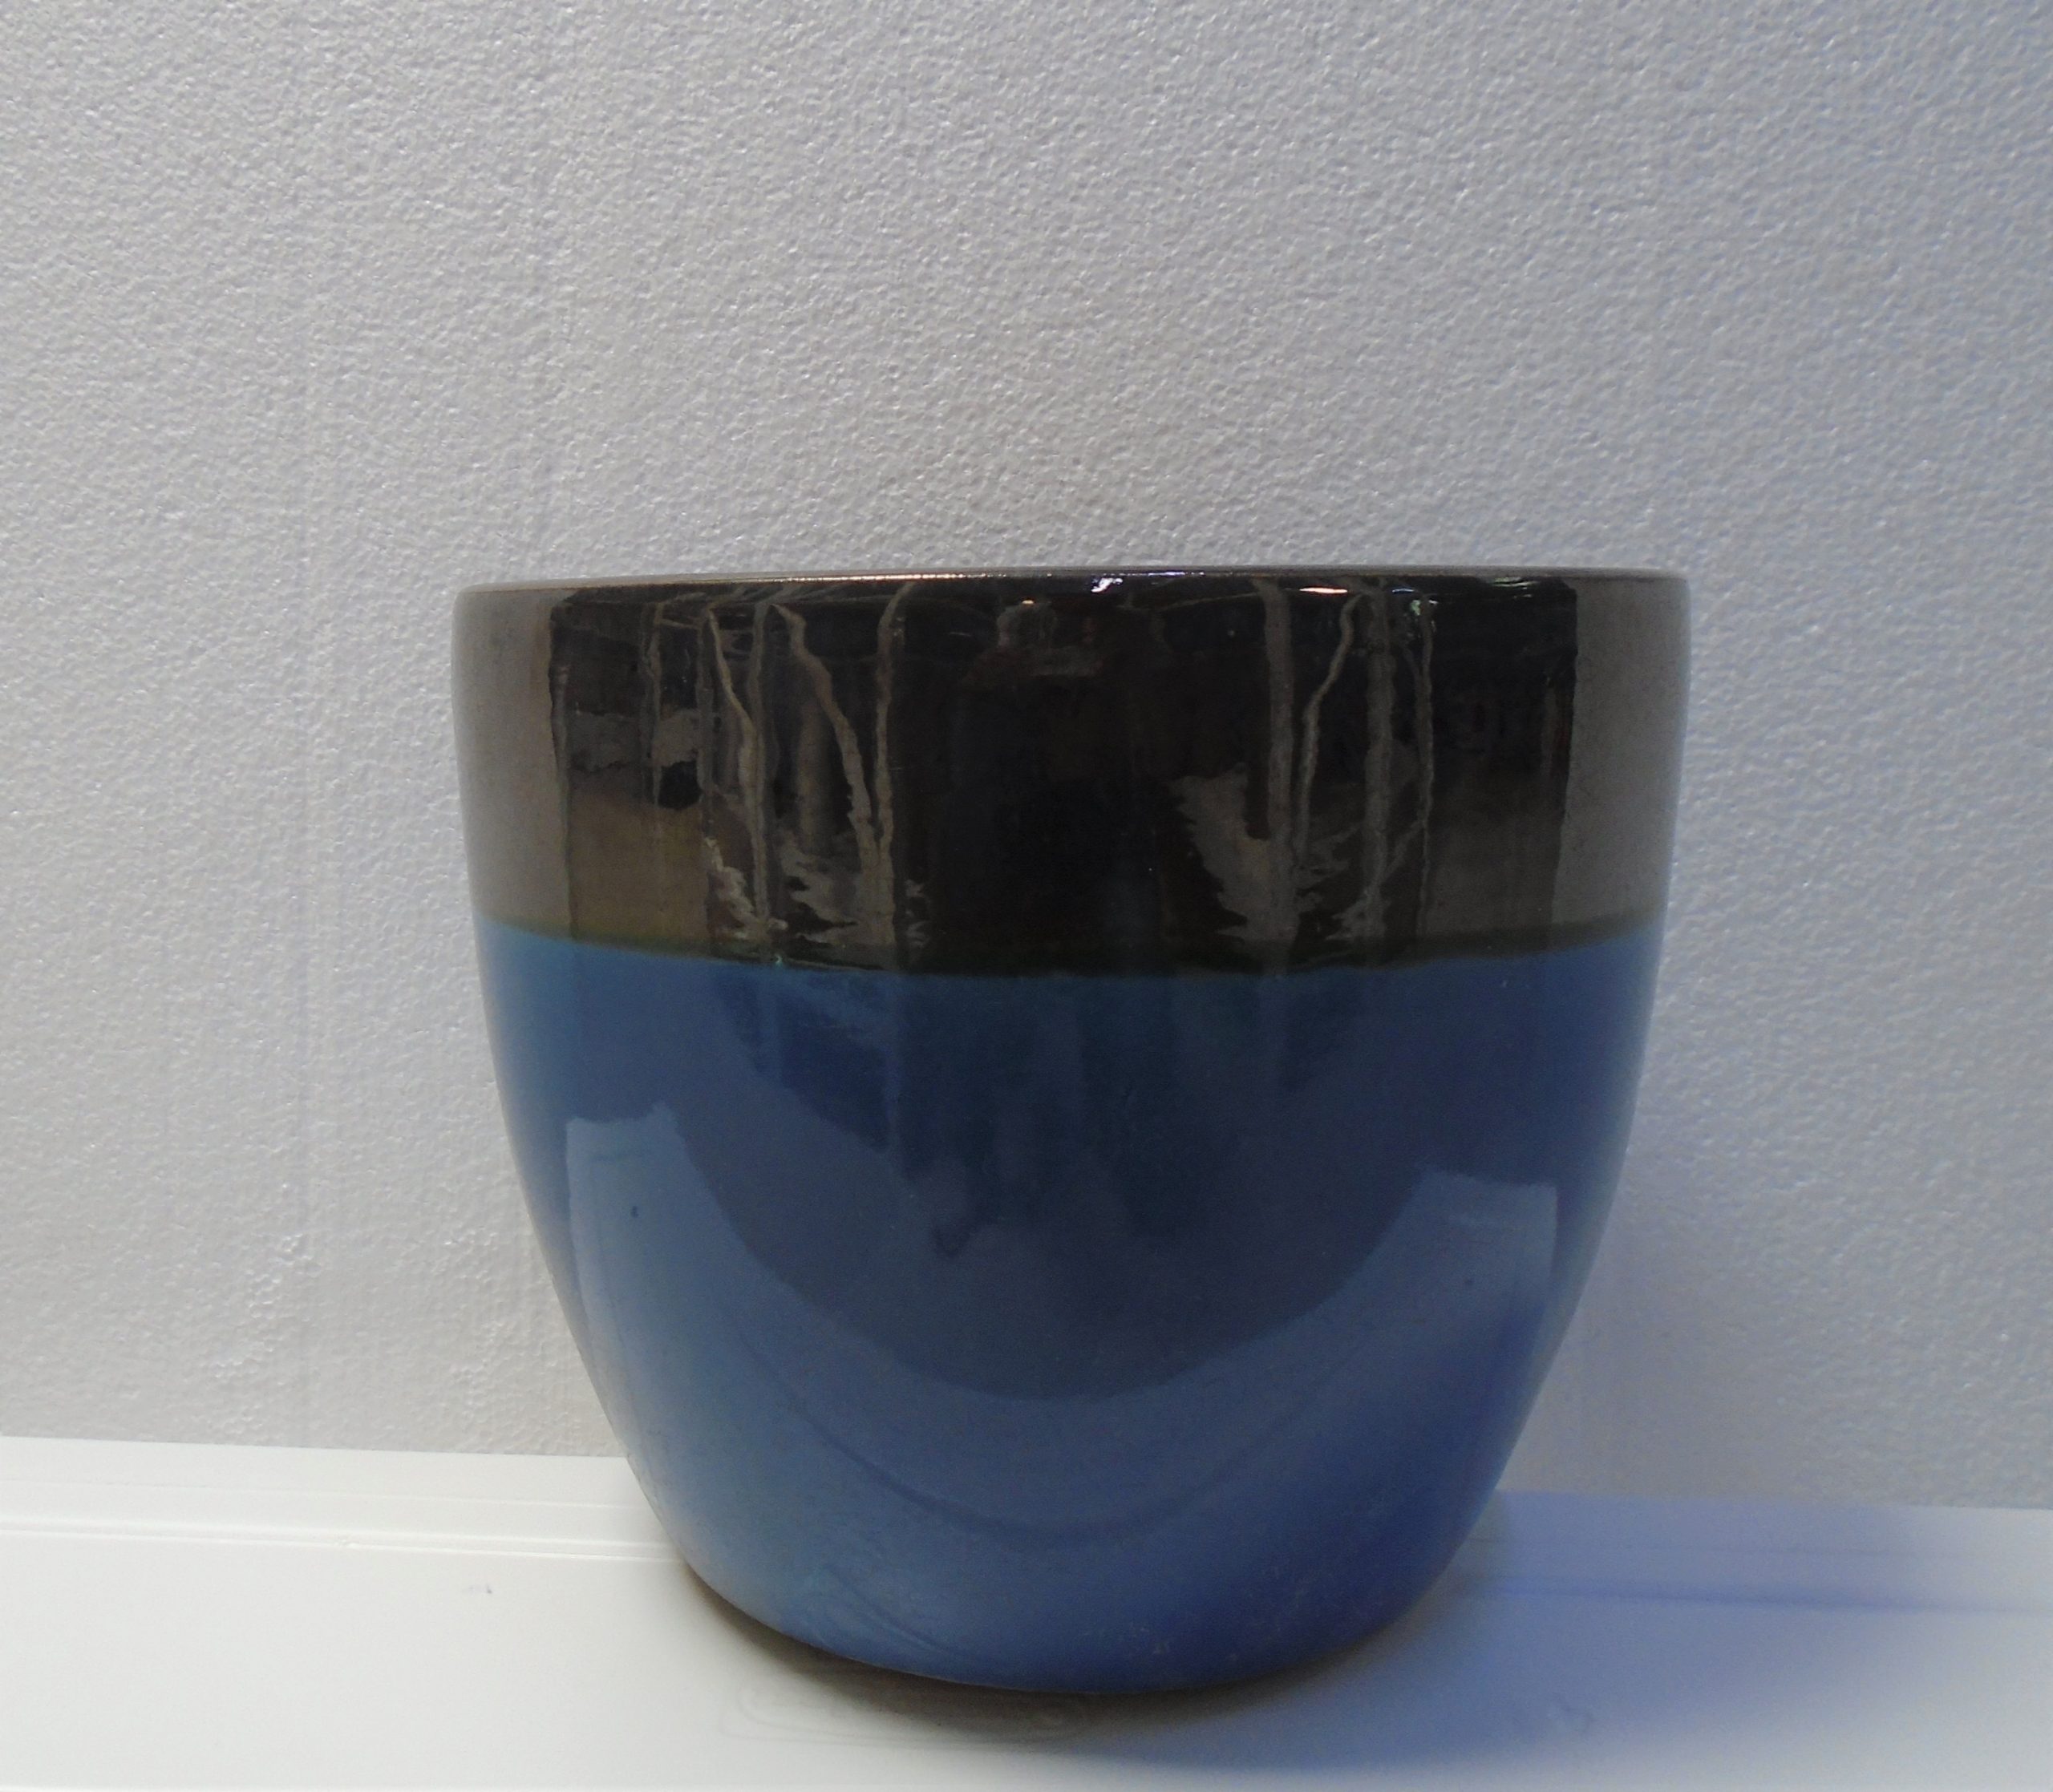 Buy Ceramic Coated Clay Pot Online on Qetaat.com